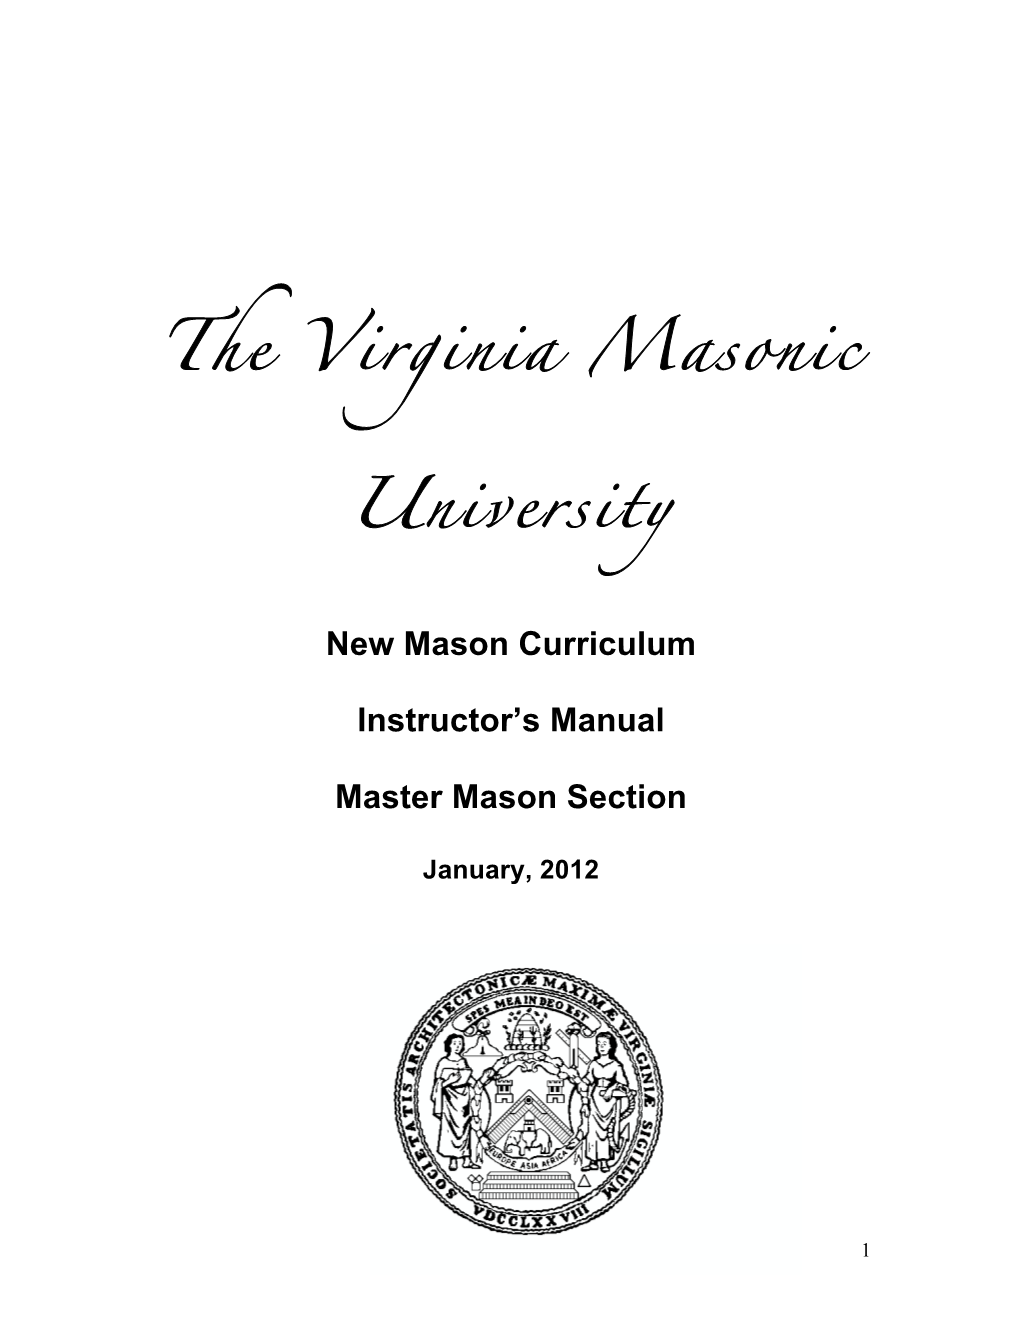 The Virginia Masonic University (VMU), New Mason Education Curriculum